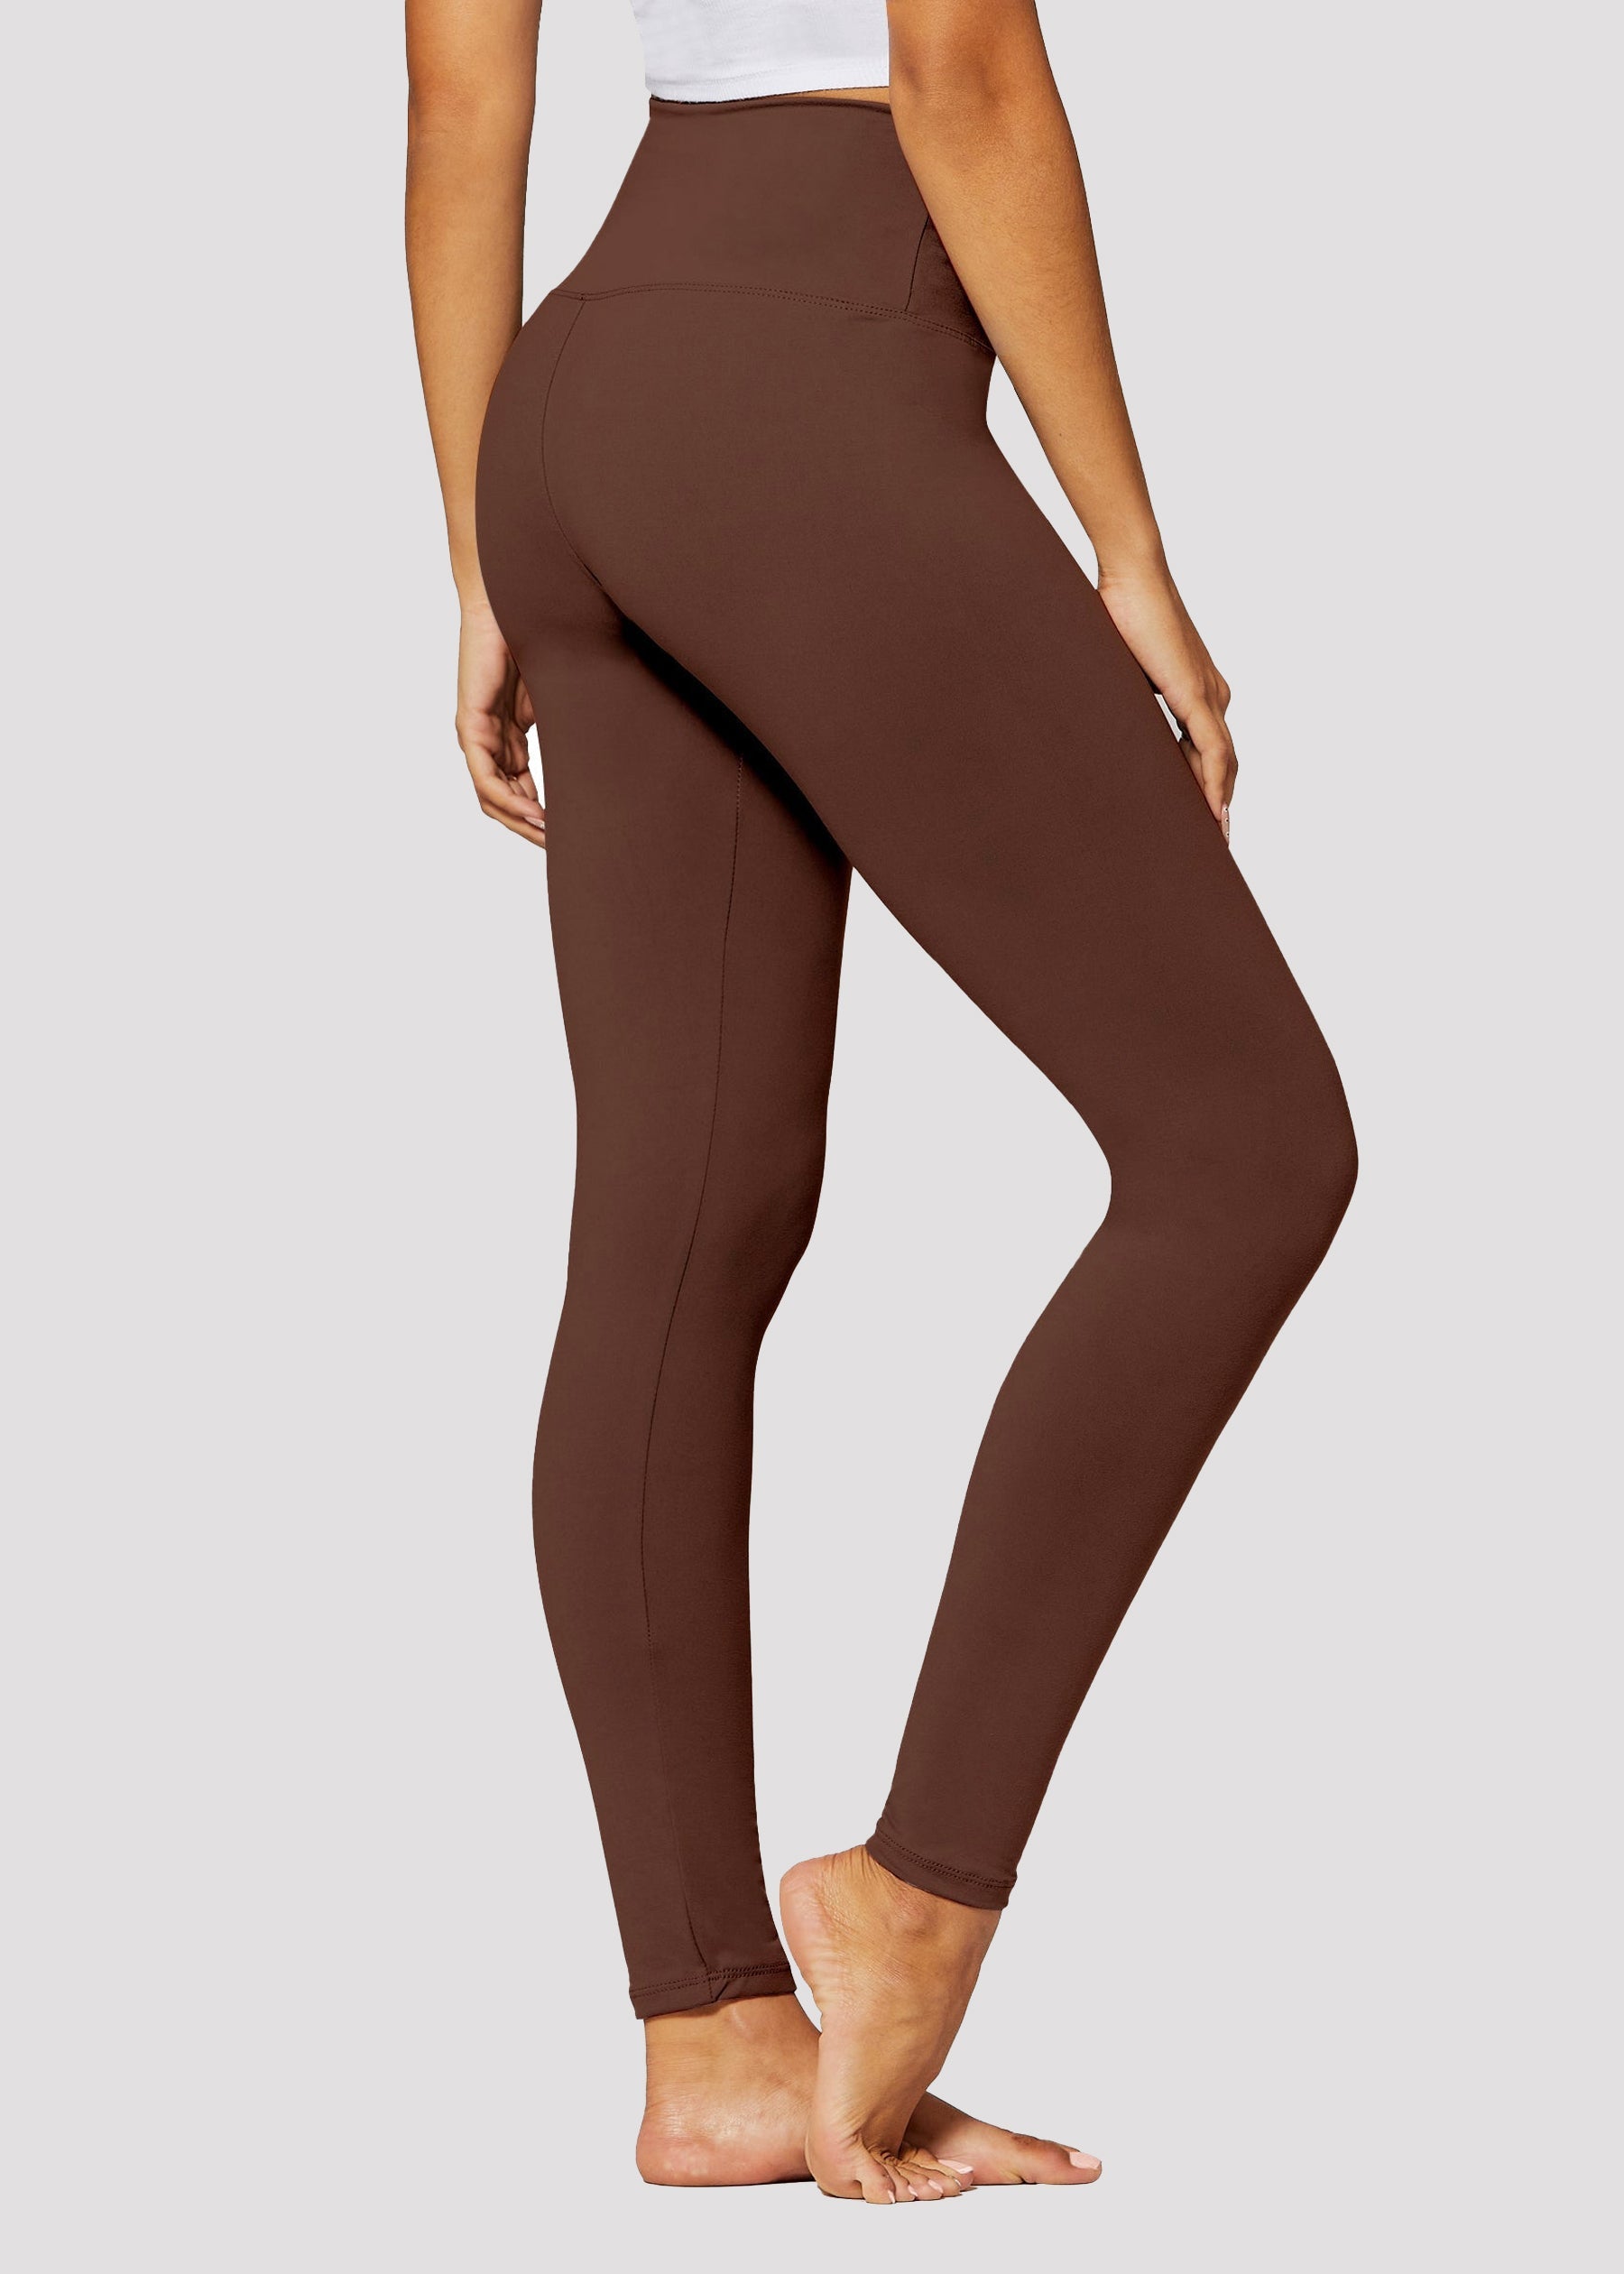 Women Brown Cotton Lycra Leggings, Casual Wear, Slim Fit at Rs 120